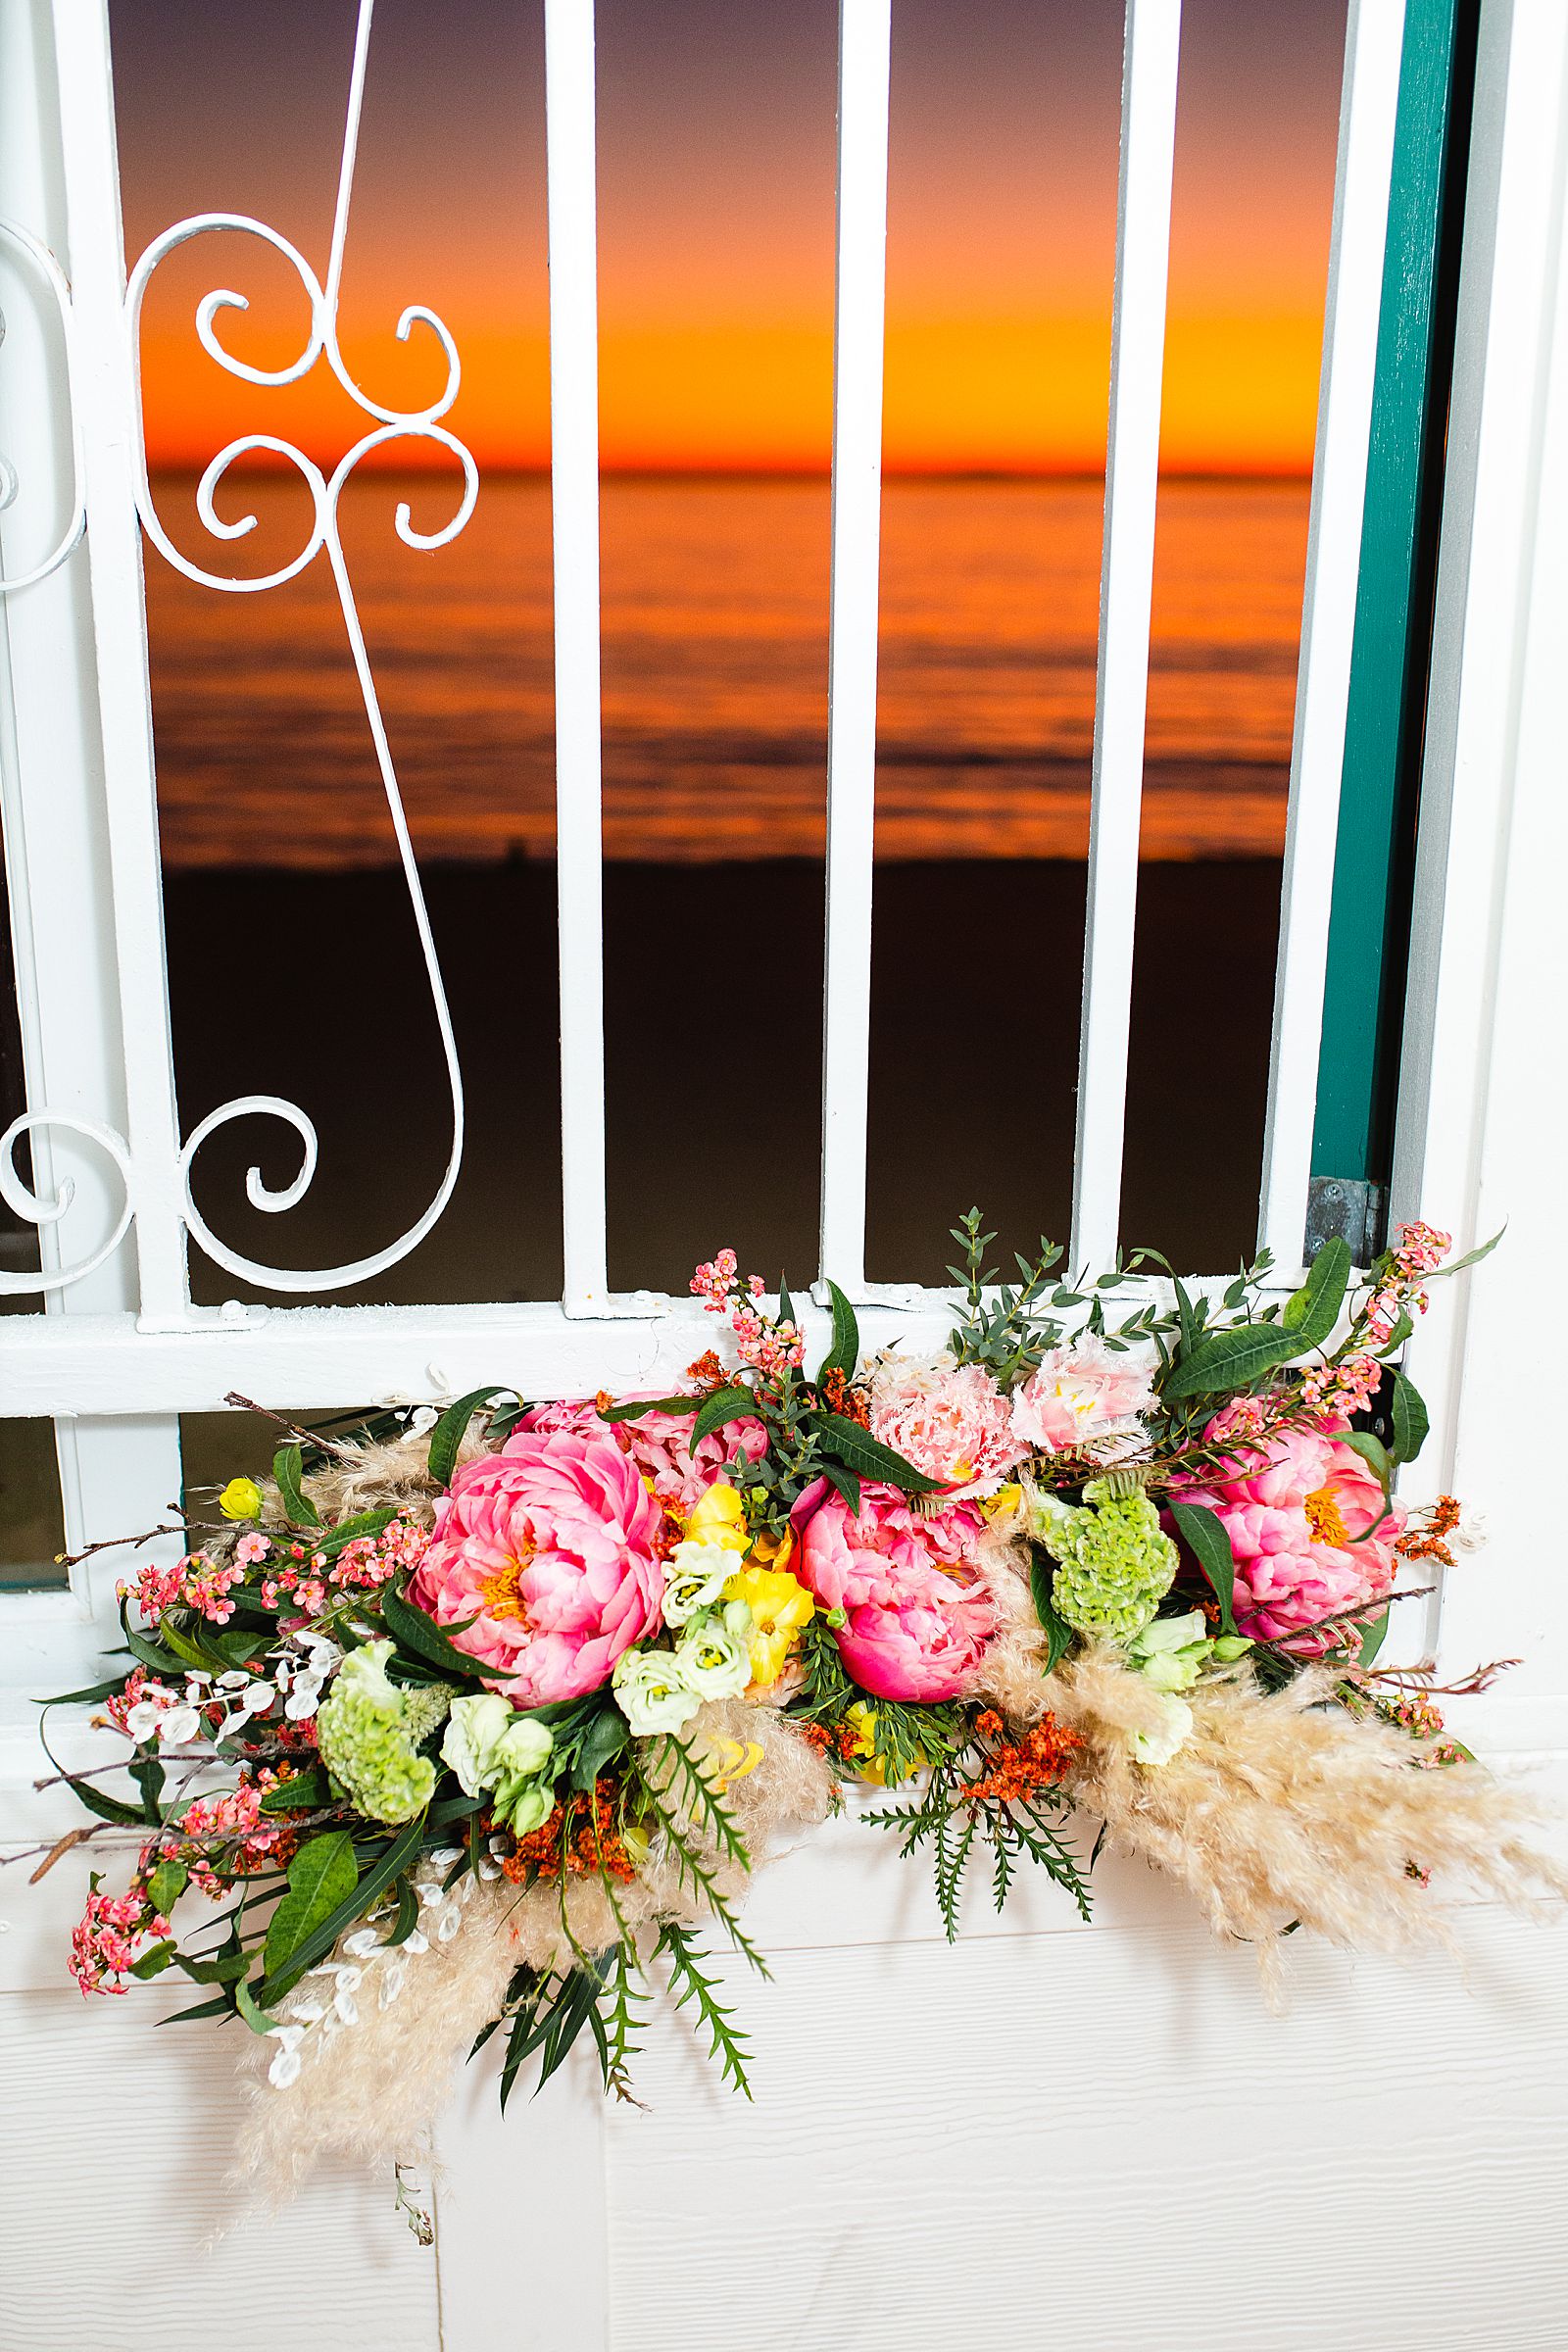 Reception Details | Wedding Dinner Details | Wedding Photographer | California Wedding | Newport Beach Wedding Reception | Bridal Bouquet